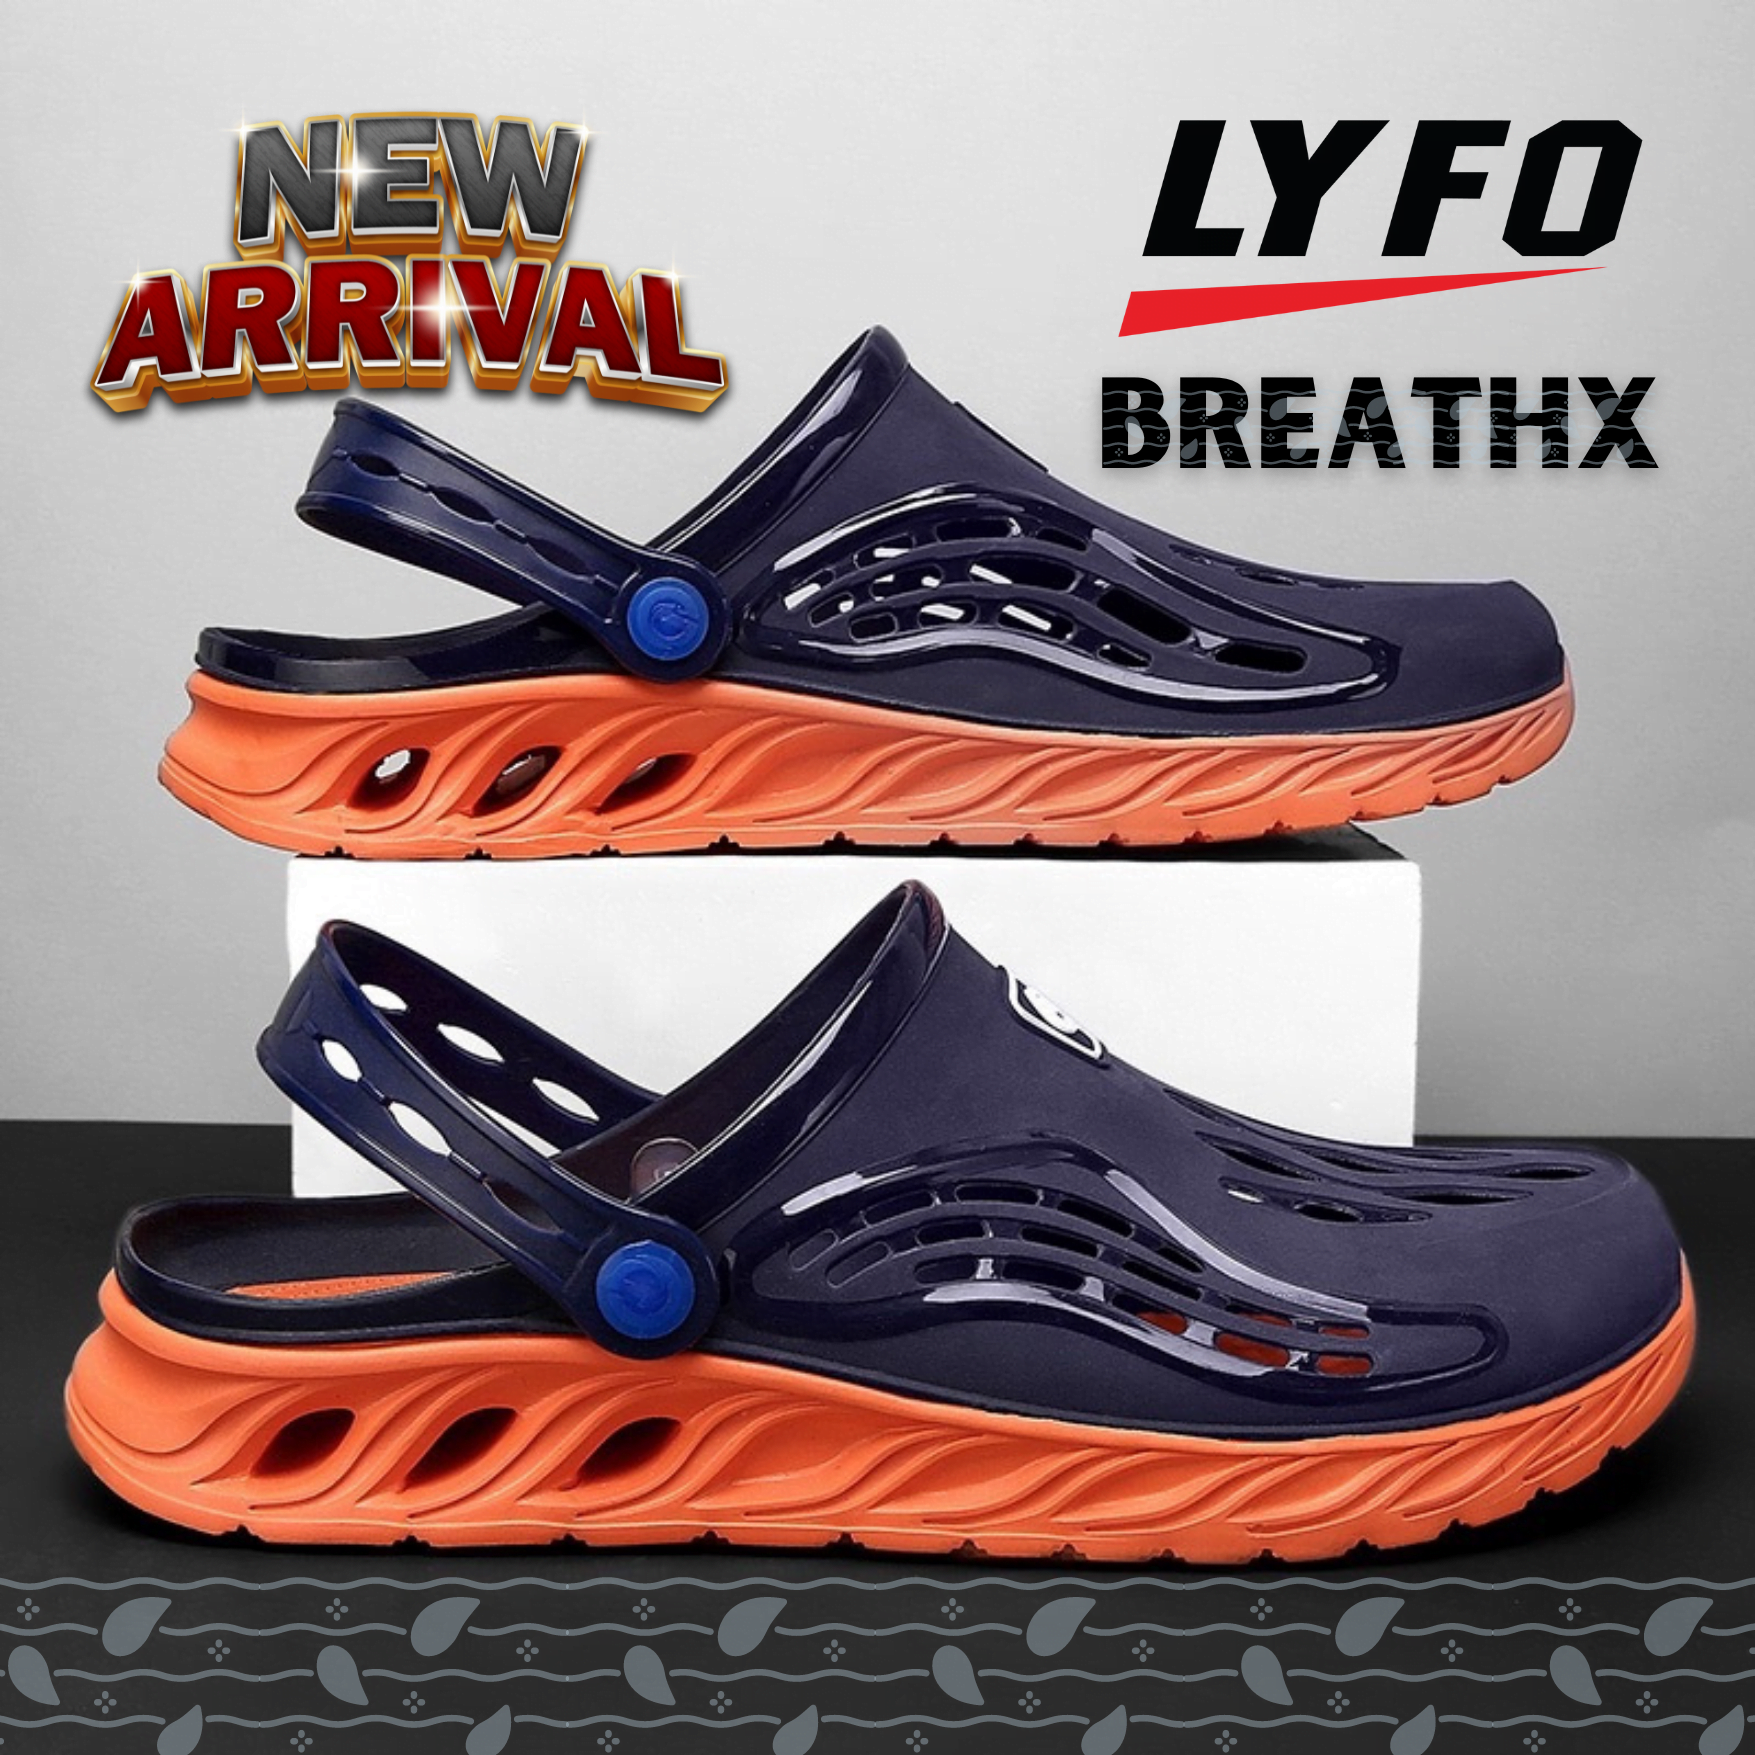 LYFO BreathX Collection – lyfobd